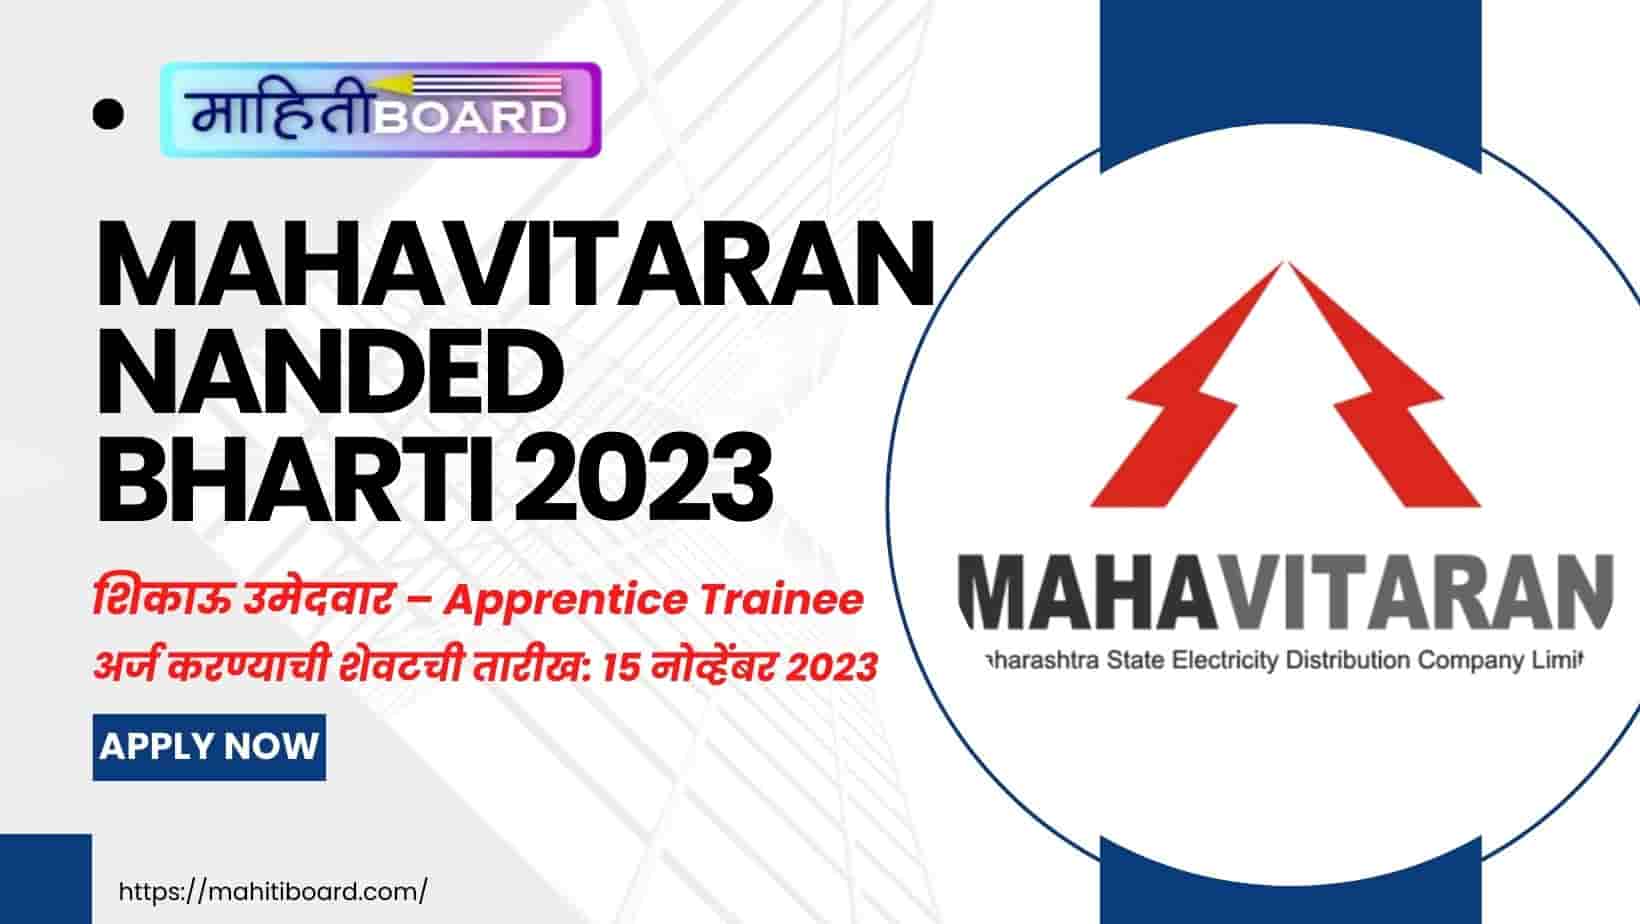 Mahavitaran Nanded Bharti 2023